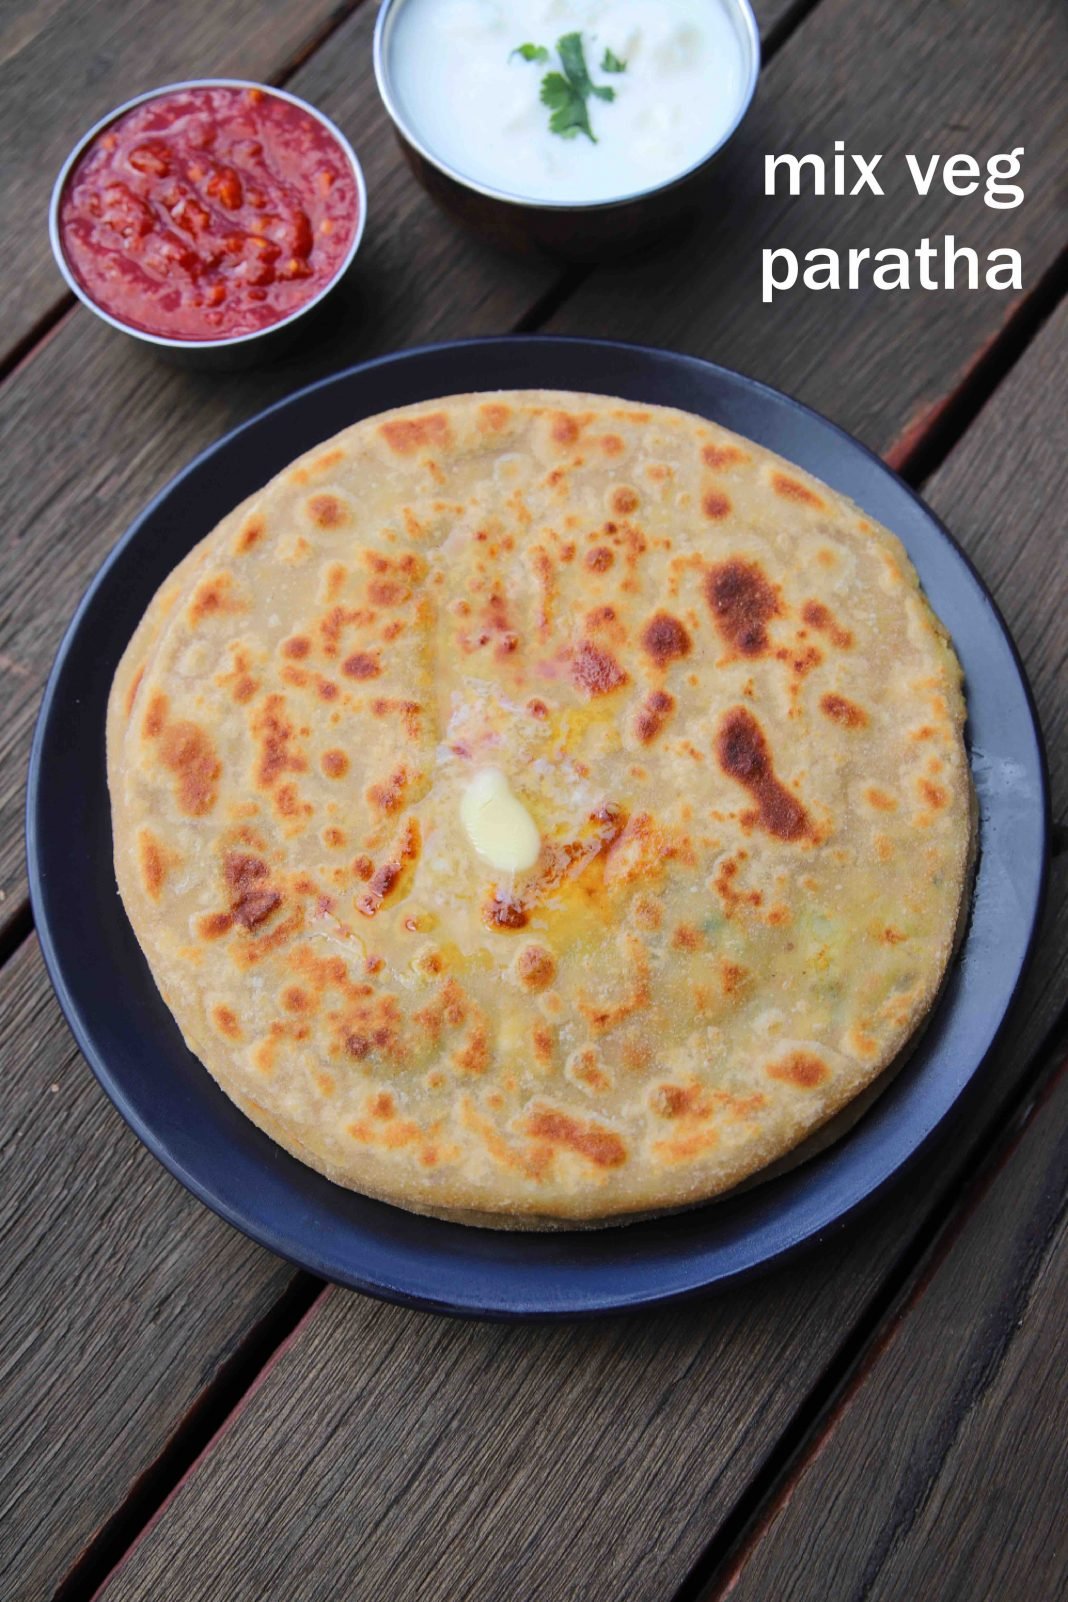 mix veg paratha recipe | vegetable paratha | how to make mix veg paratha